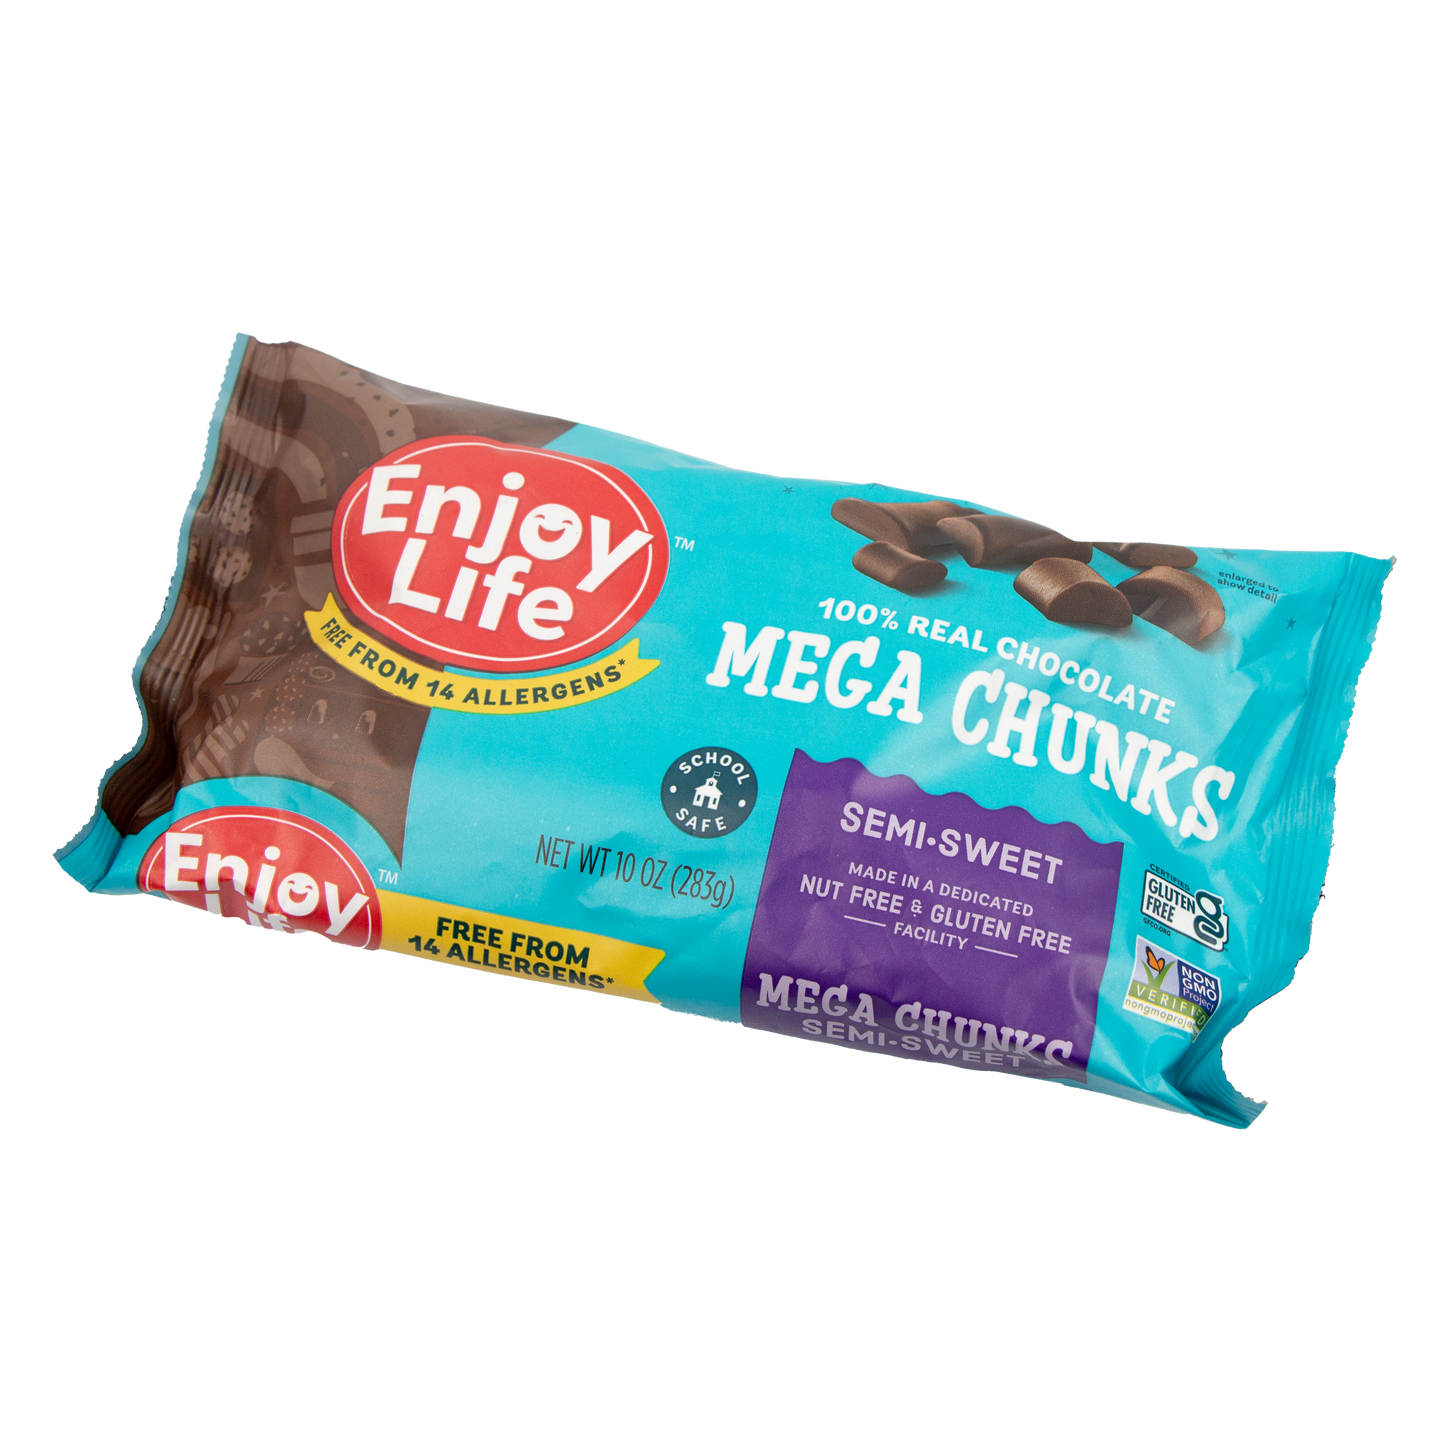 Enjoy Life - Chocolate Chips - Mega Chunks